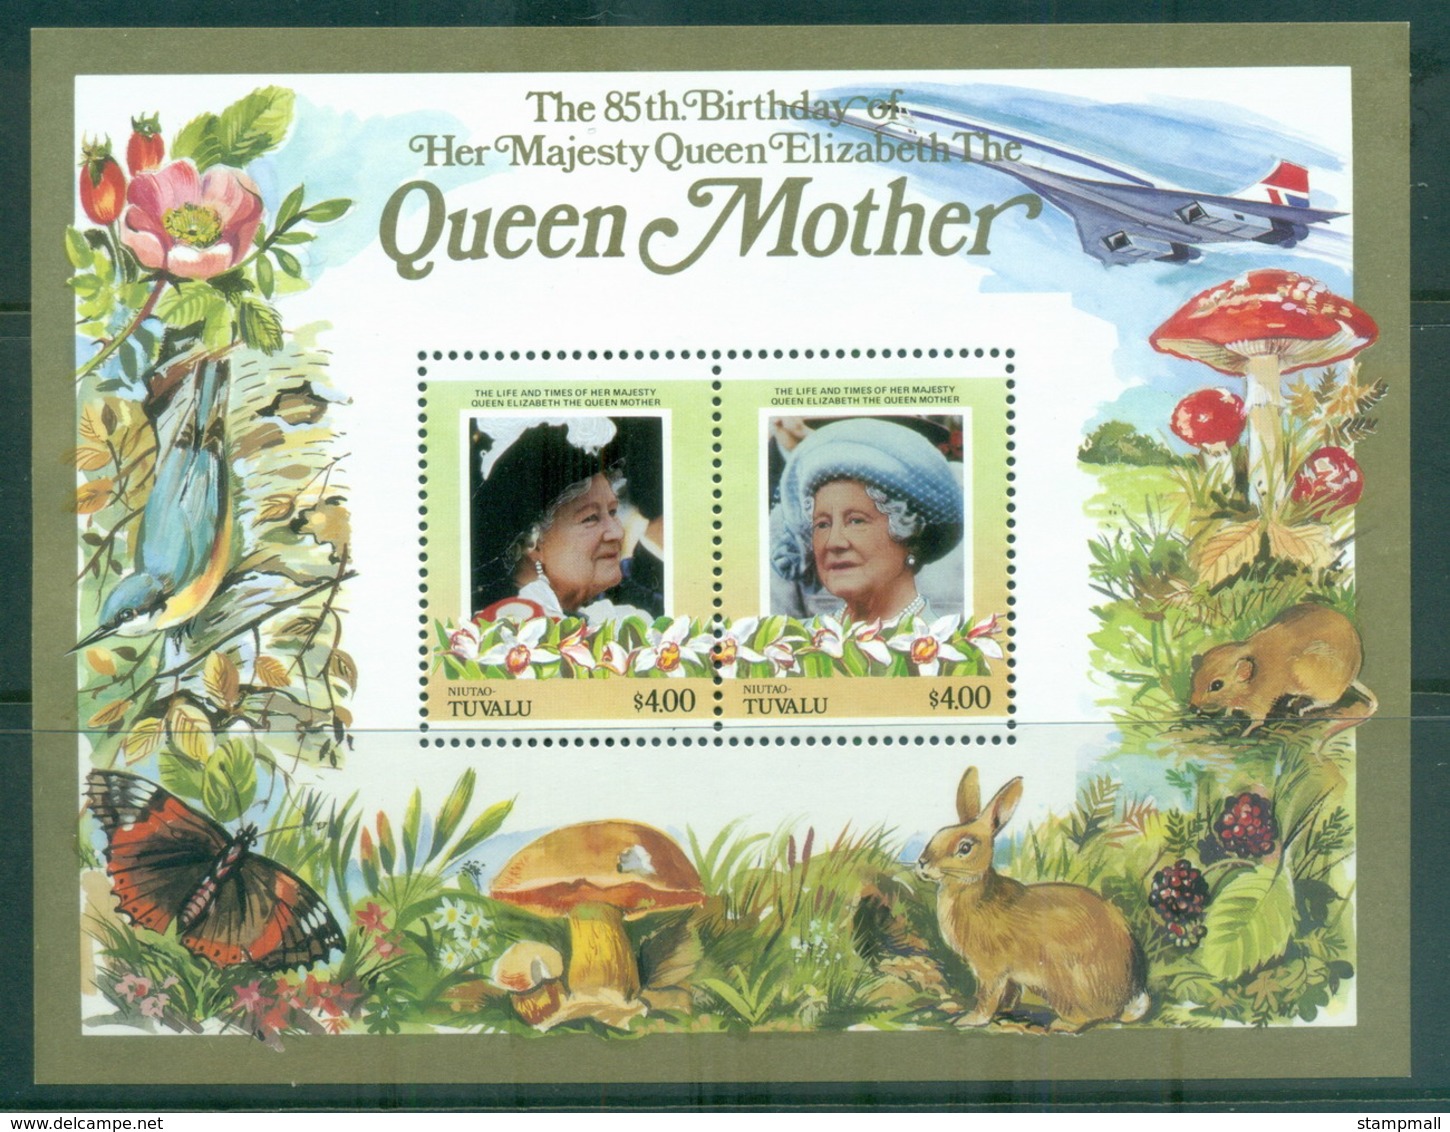 Tuvalu Niutao 1986 Queen Mother 85th Birthday $4 MS MUH - Tuvalu (fr. Elliceinseln)